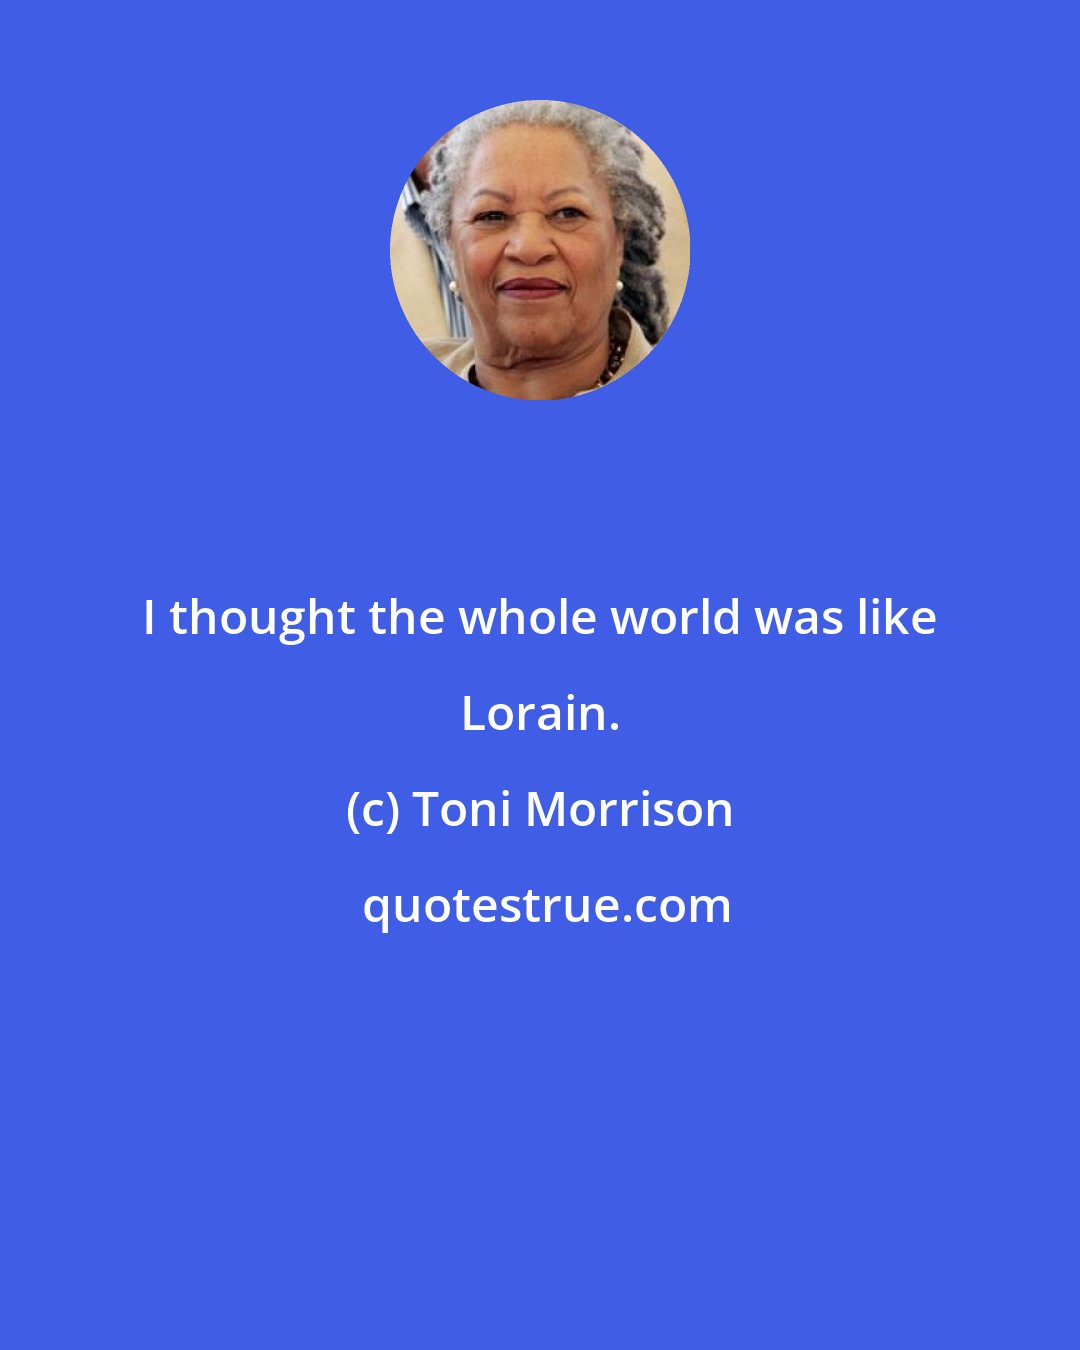 Toni Morrison: I thought the whole world was like Lorain.